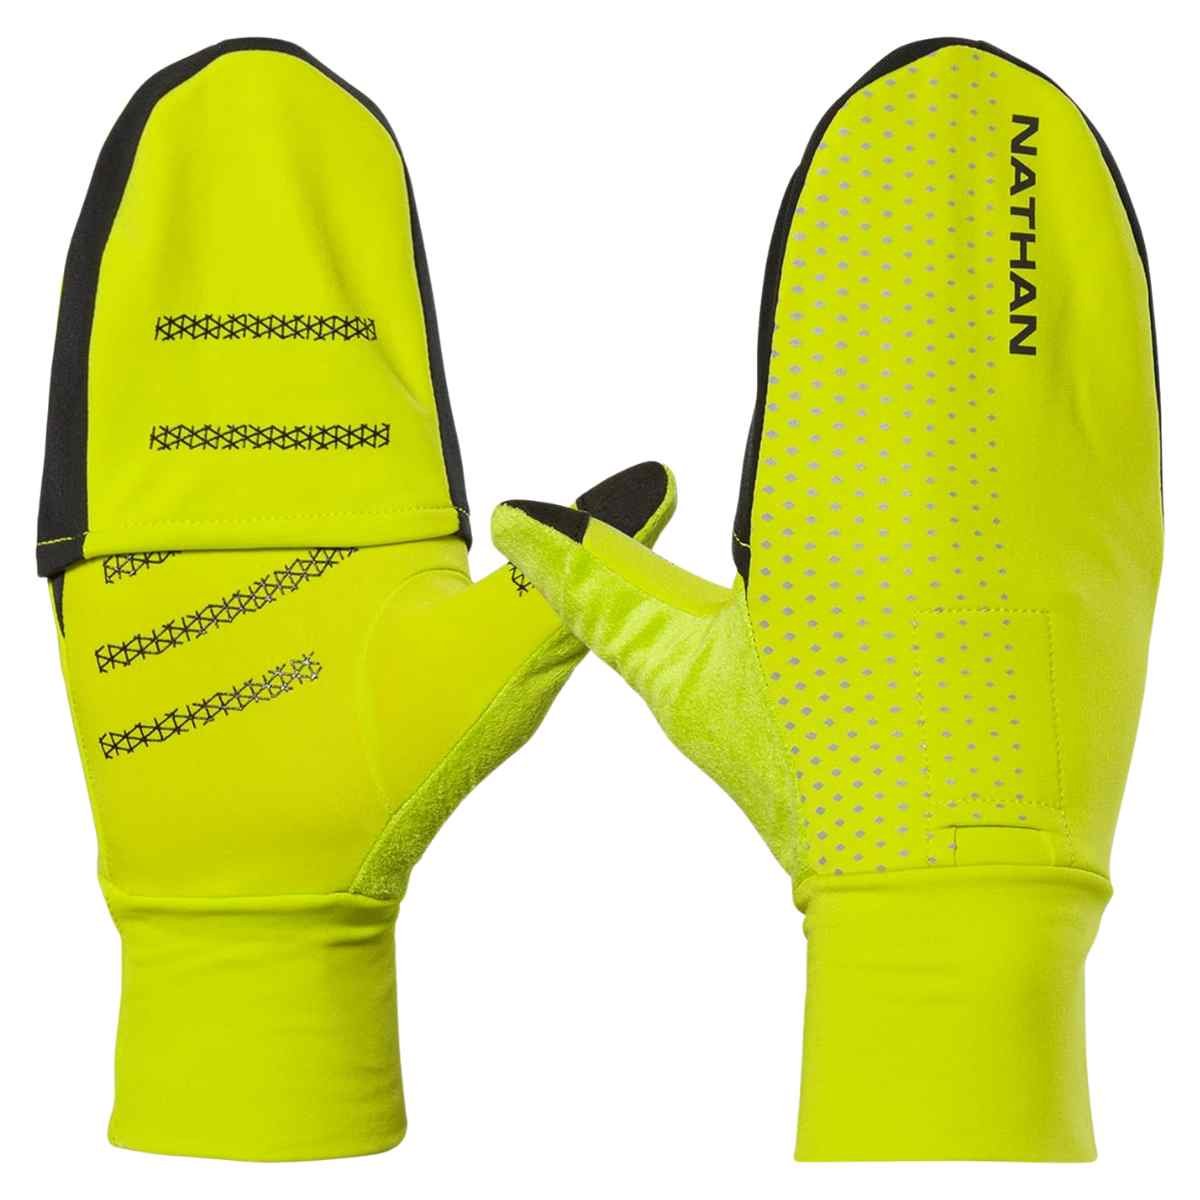 Maxbell Ice Silk Gloves Sun Protection Gloves Men Comfortable for